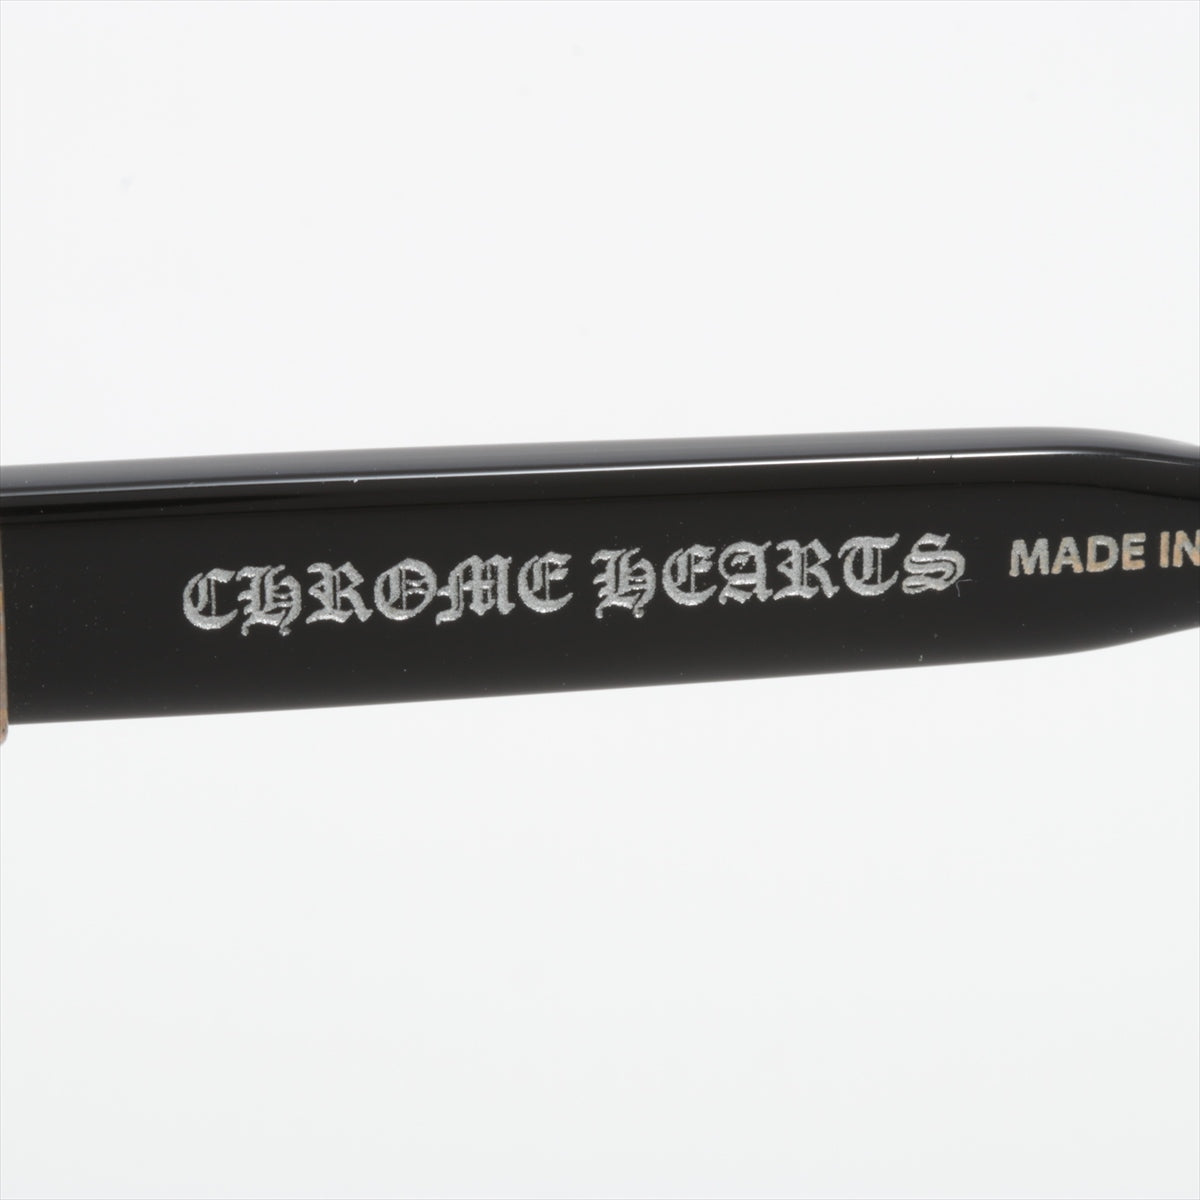 Chrome Hearts COX UCKER Glasses Plastic Black 52□19-153 Degree